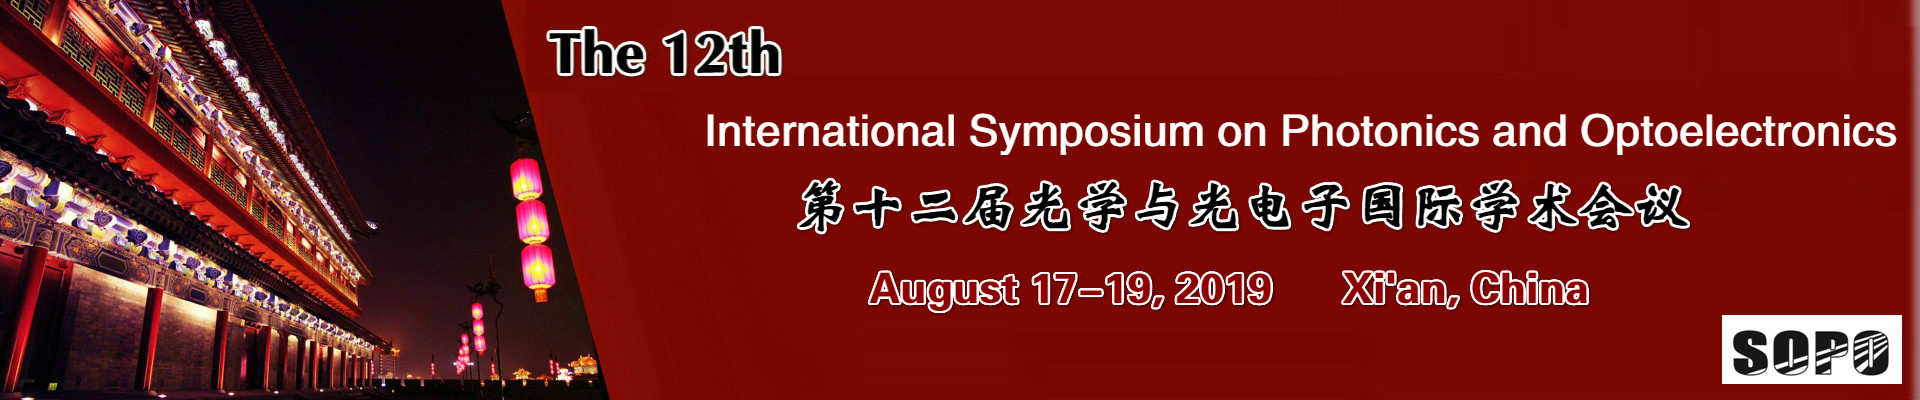 The 12th International Symposium on Photonics and Optoelectronics (SOPO 2019), Xi'an, Shaanxi, China